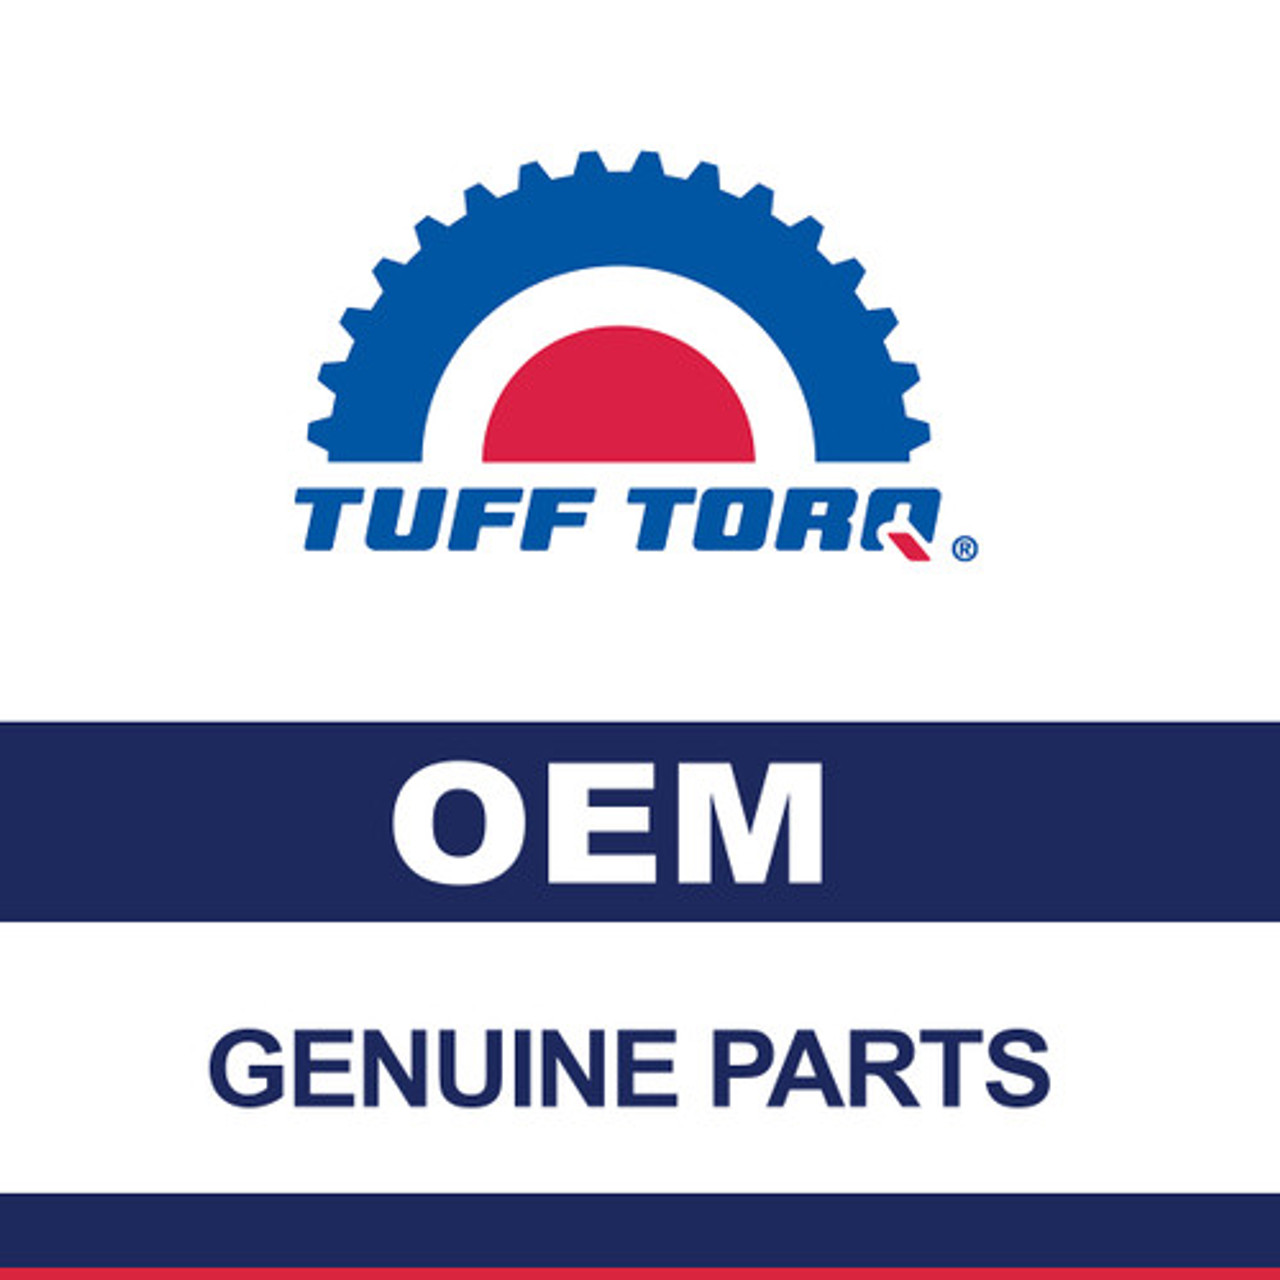 Tuff Torq OEM Logo